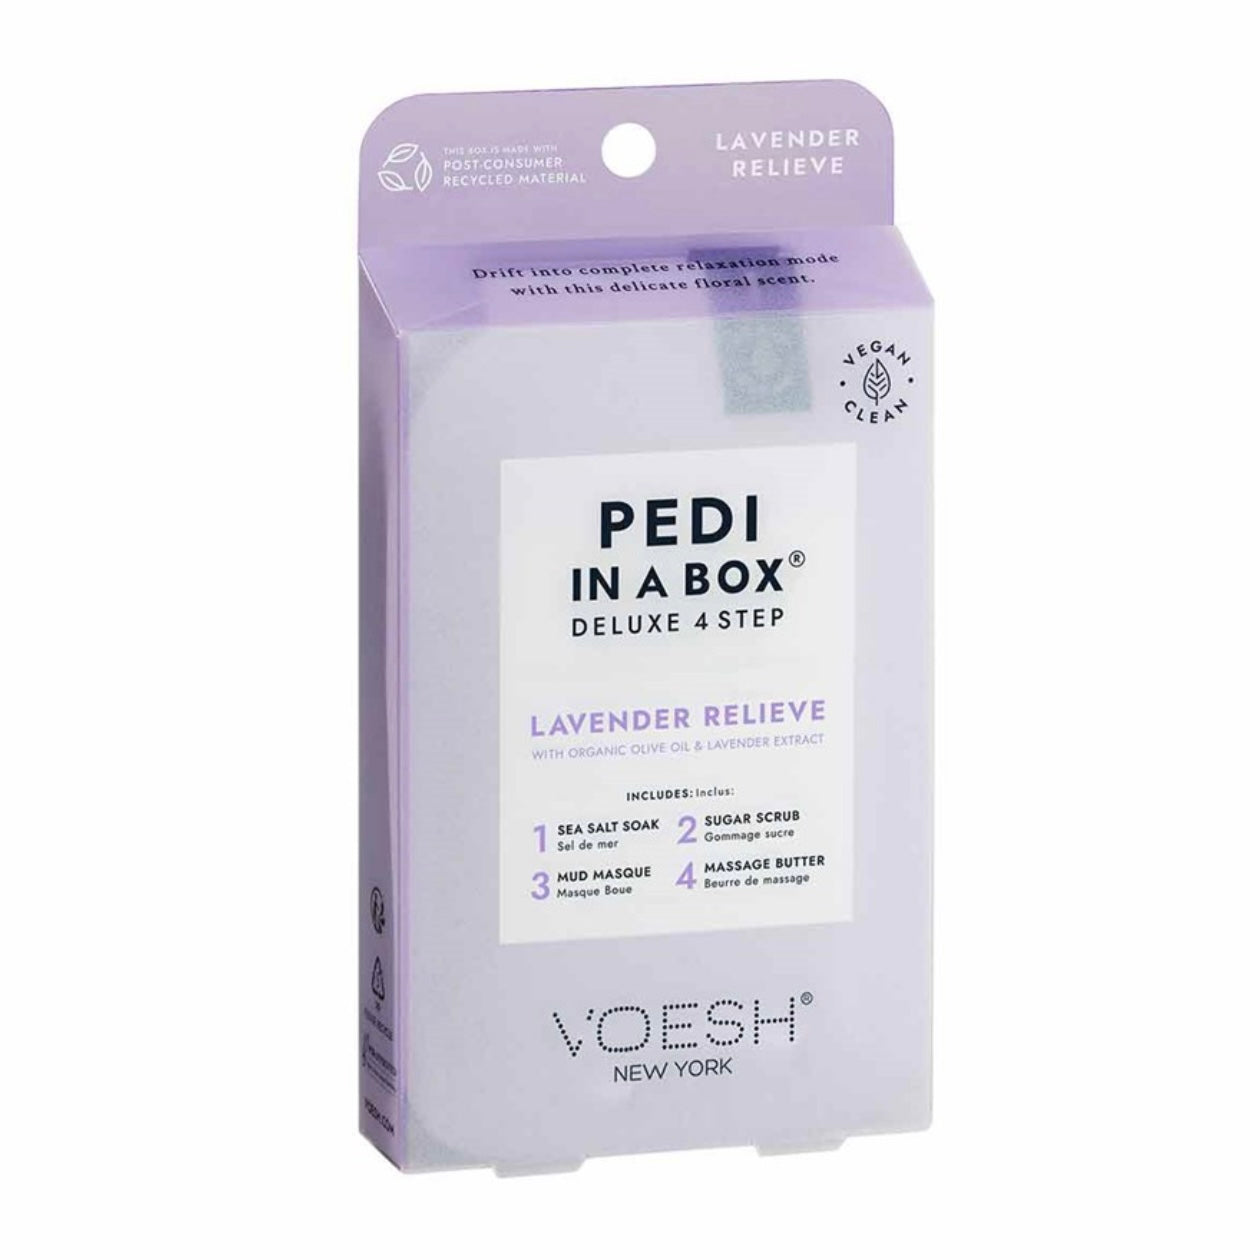 VOESH Pedi In A Box: Deluxe 4 Step - Lavender Relieve